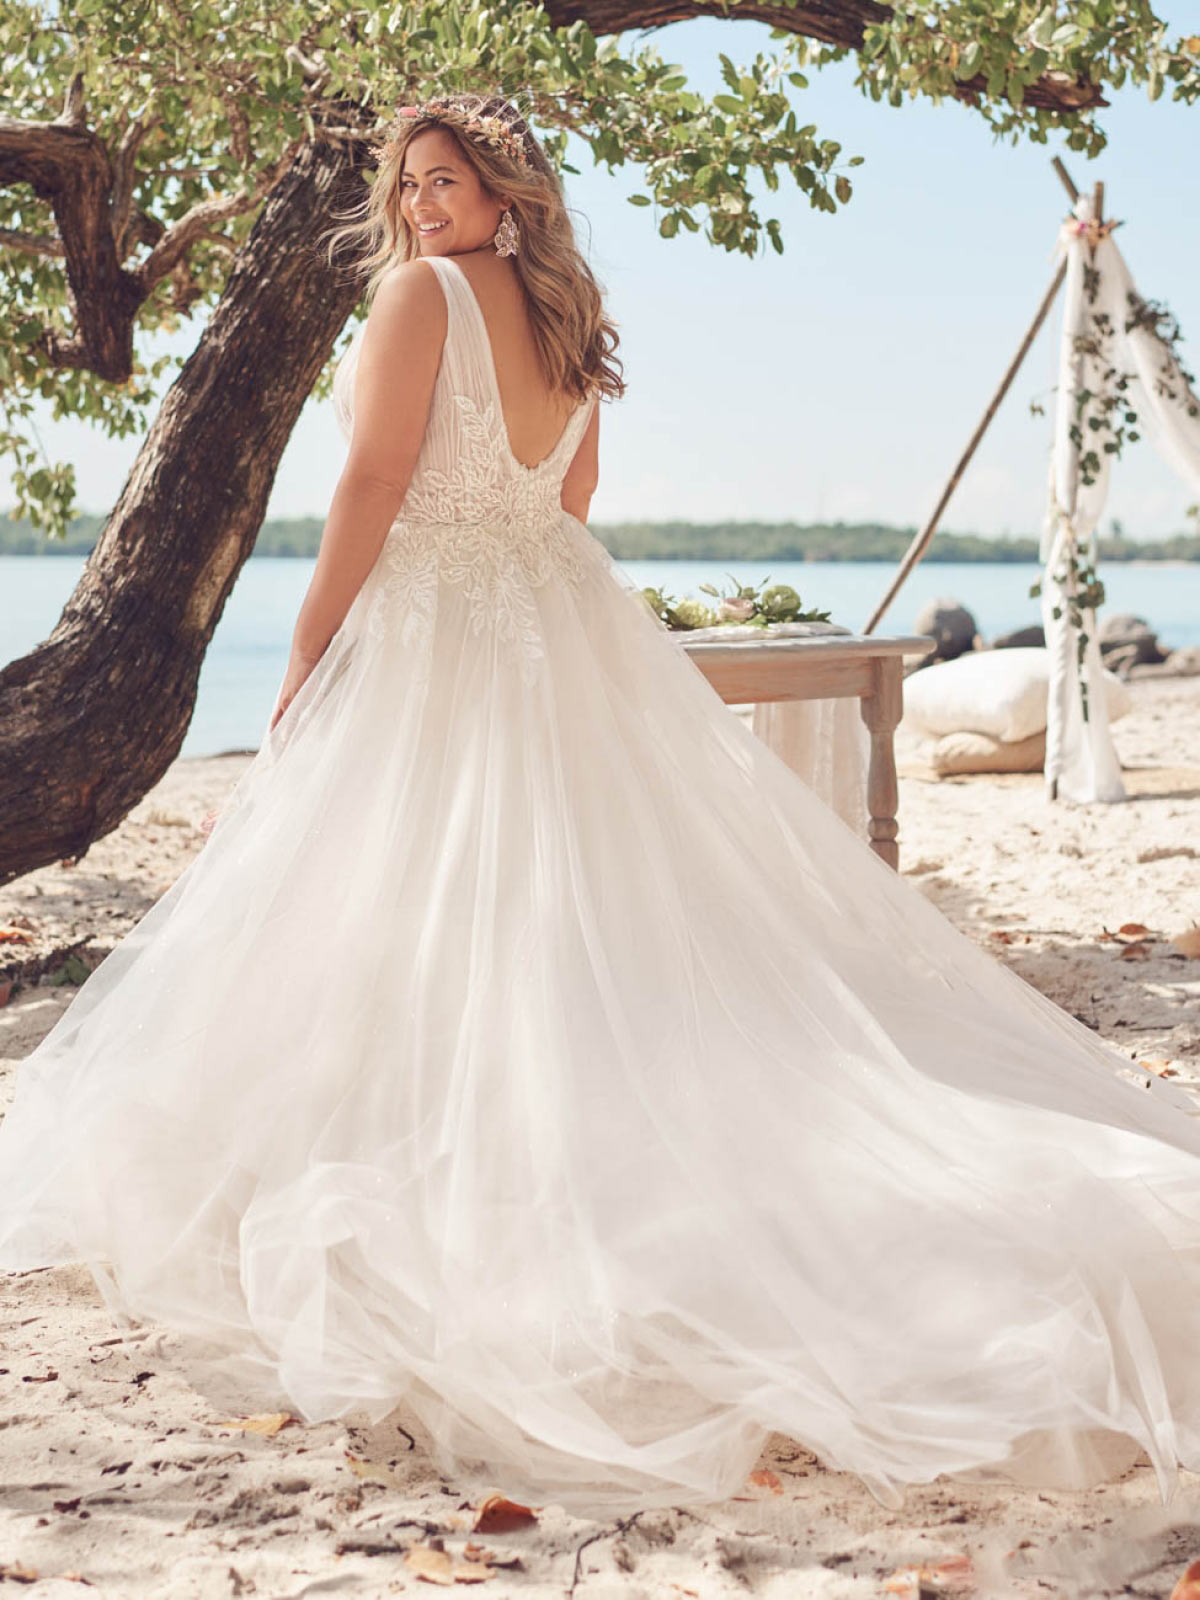 New Rebecca Ingram wedding dresses at Bliss Bridal Gowns